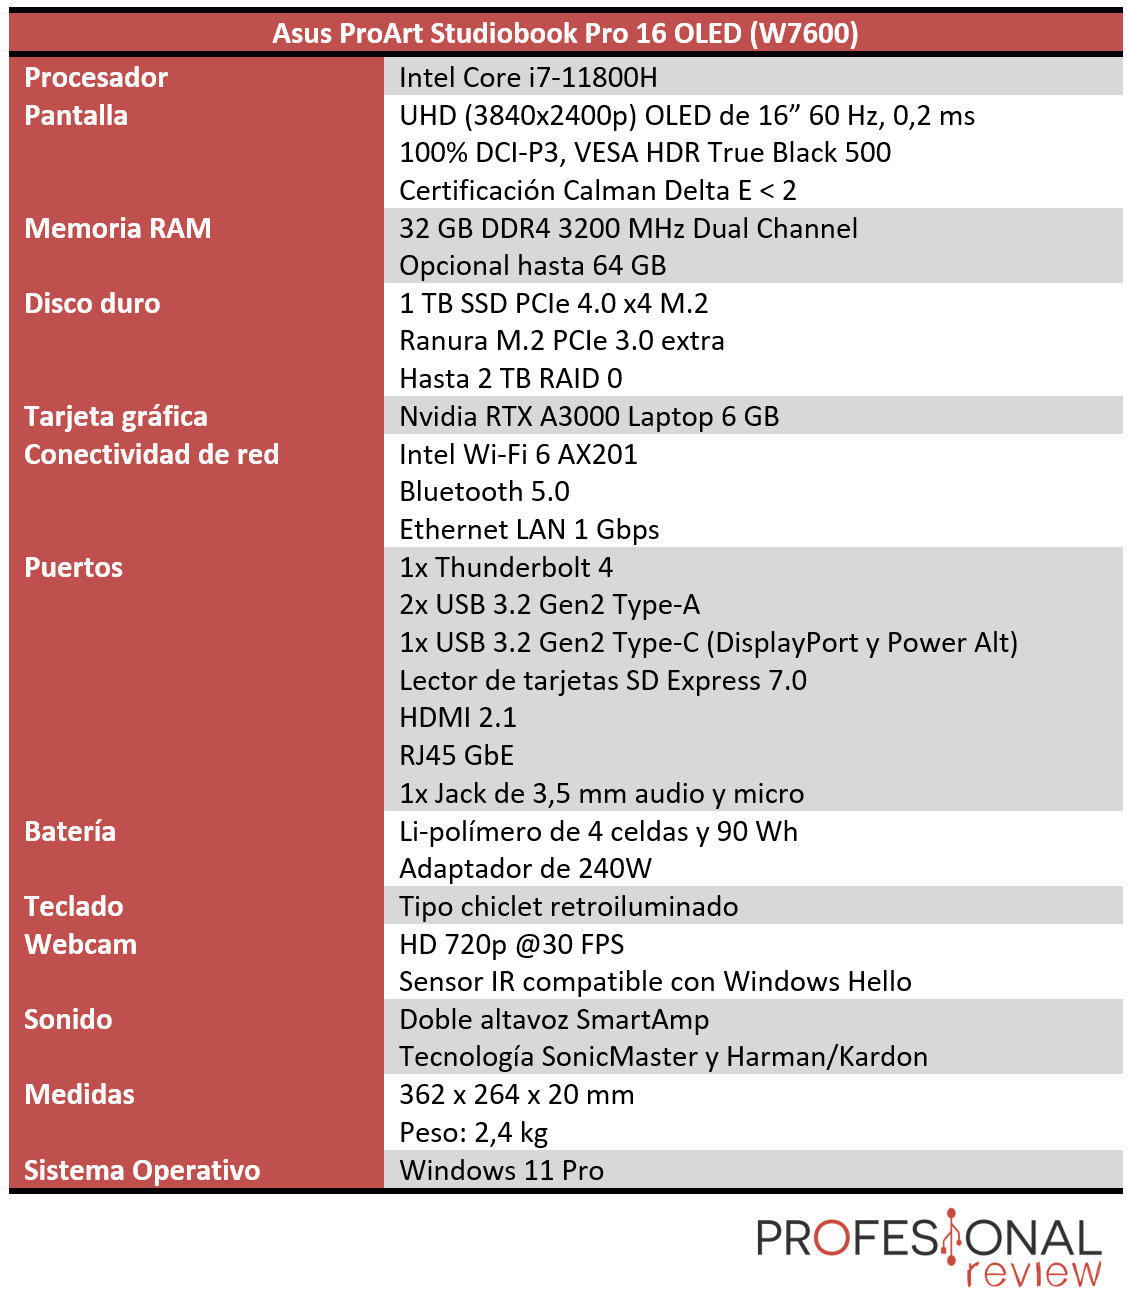 Asus ProArt Studiobook Pro 16 OLED Características